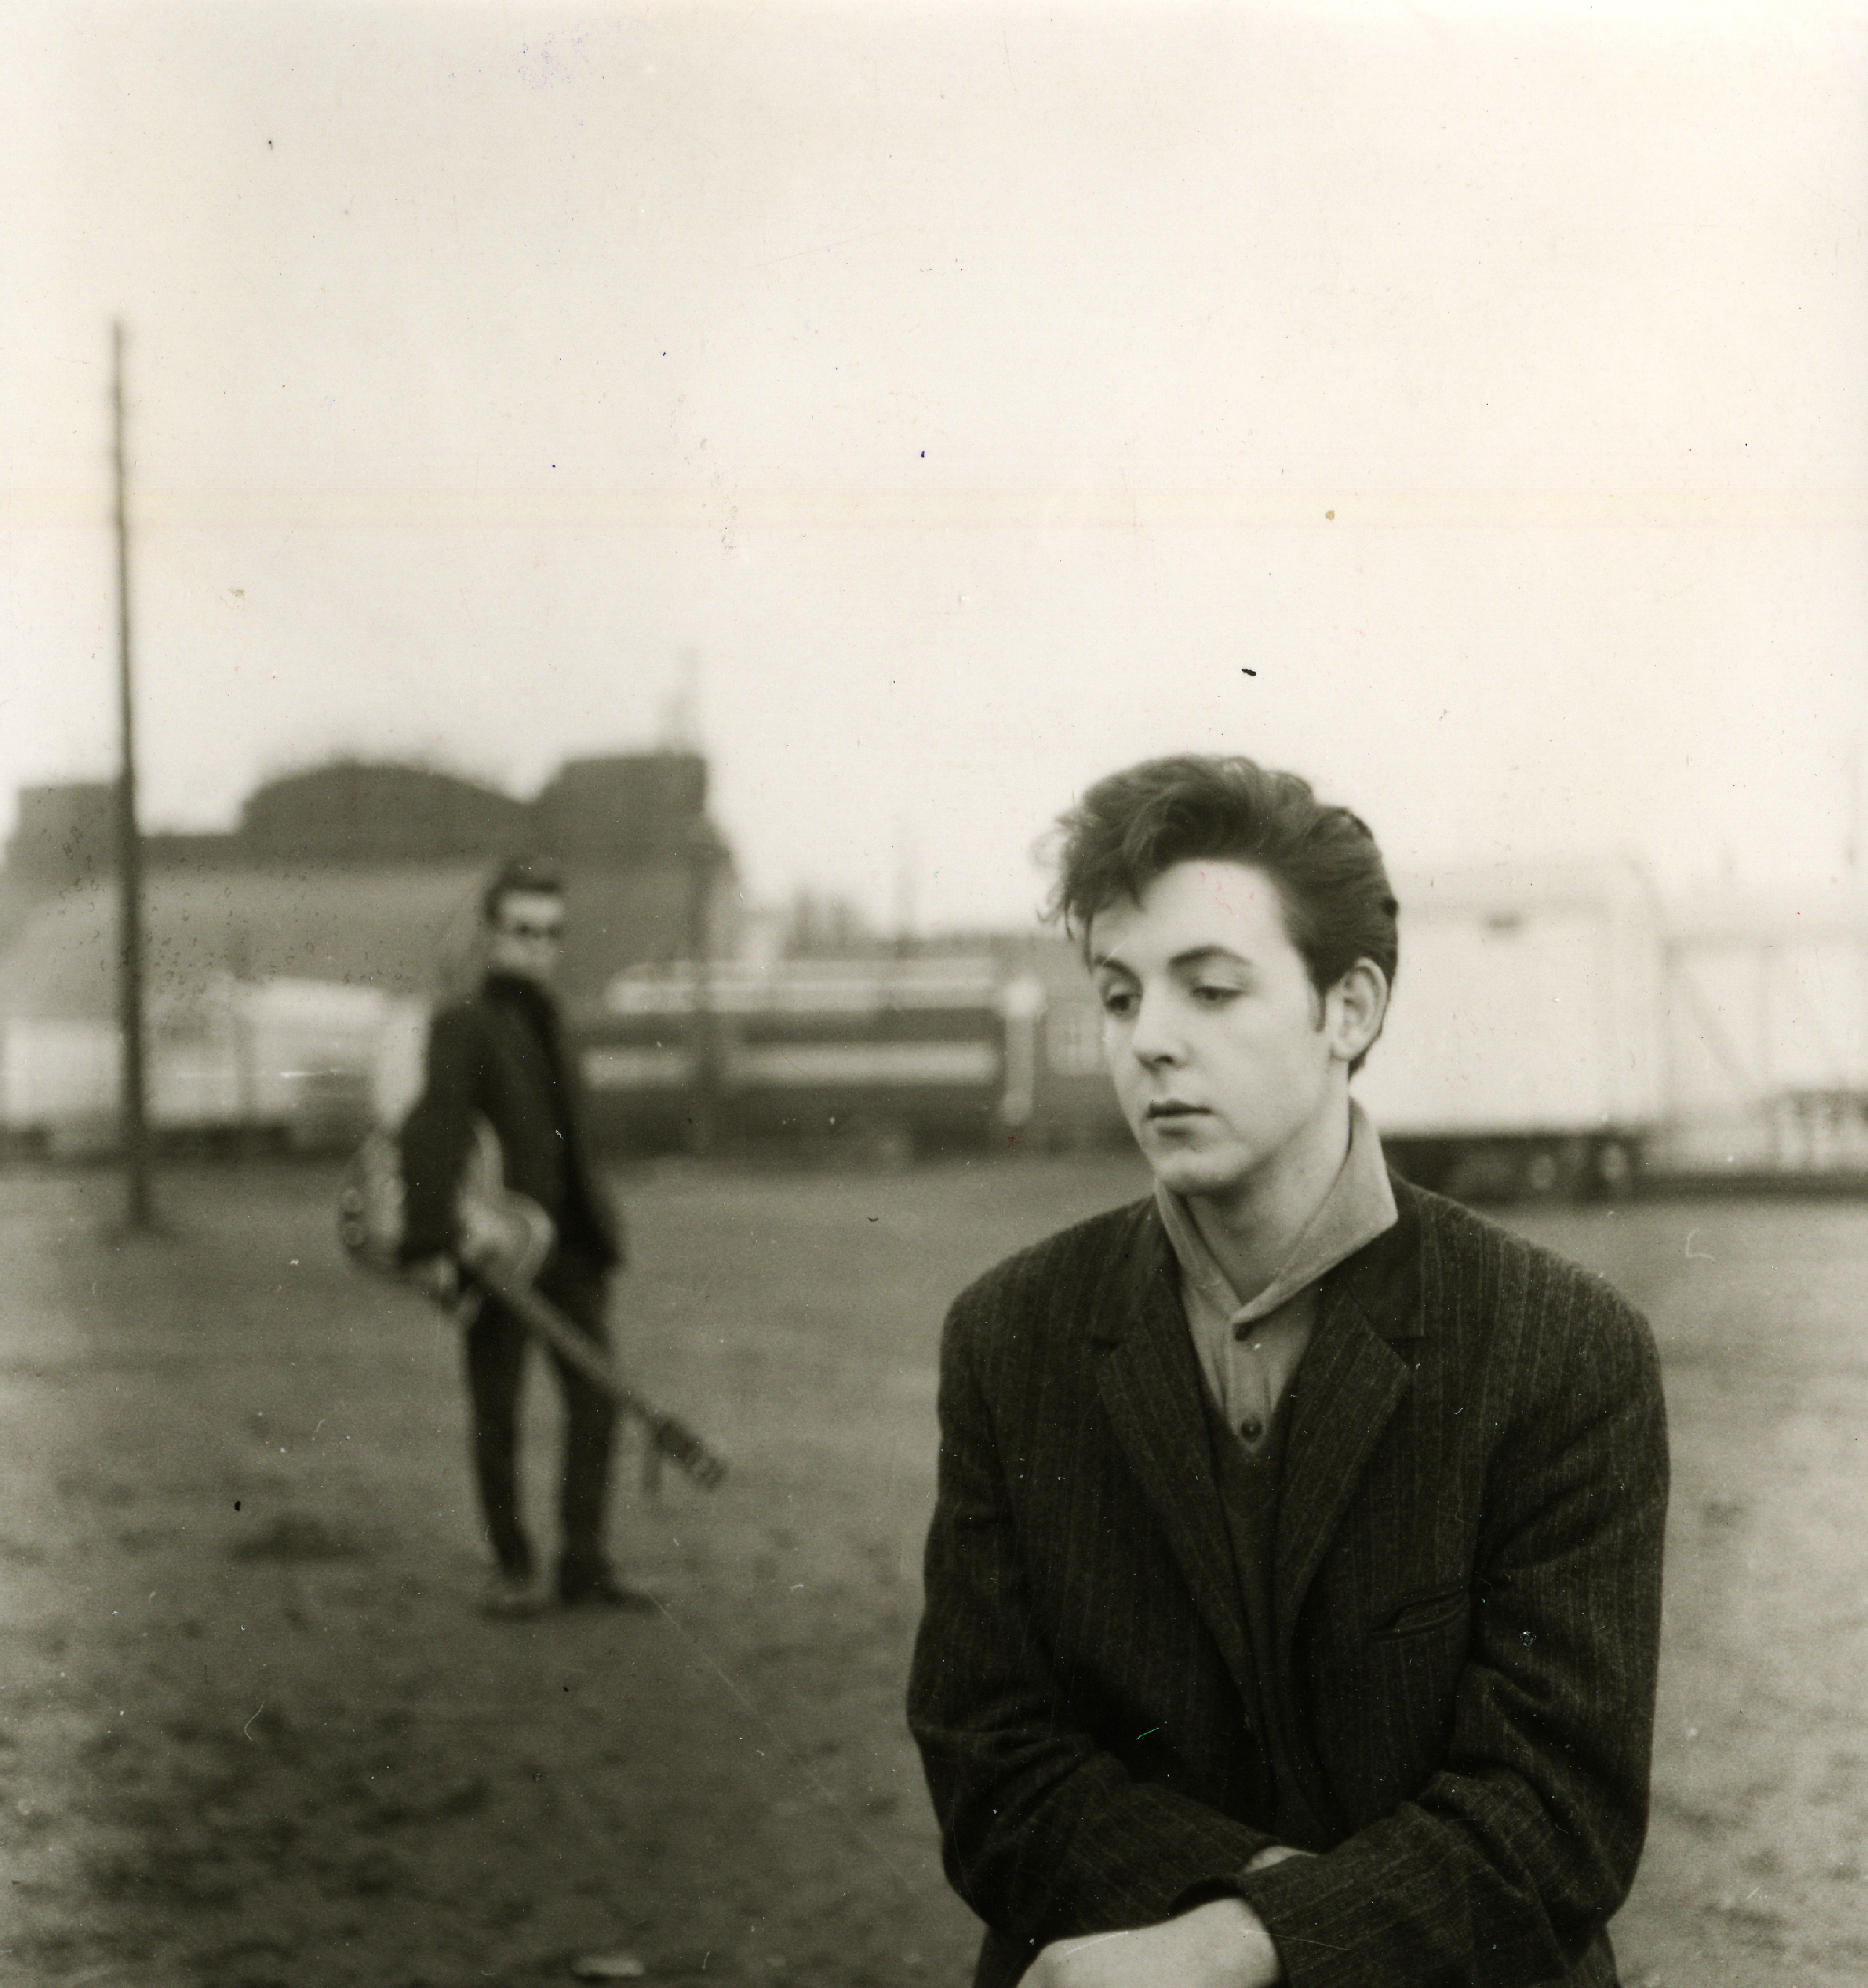 Portrait of Paul McCartney taken at the Hamburg fairgrounds with Stuart Sutcliffe in the background. Hamburg, Germany,1960.